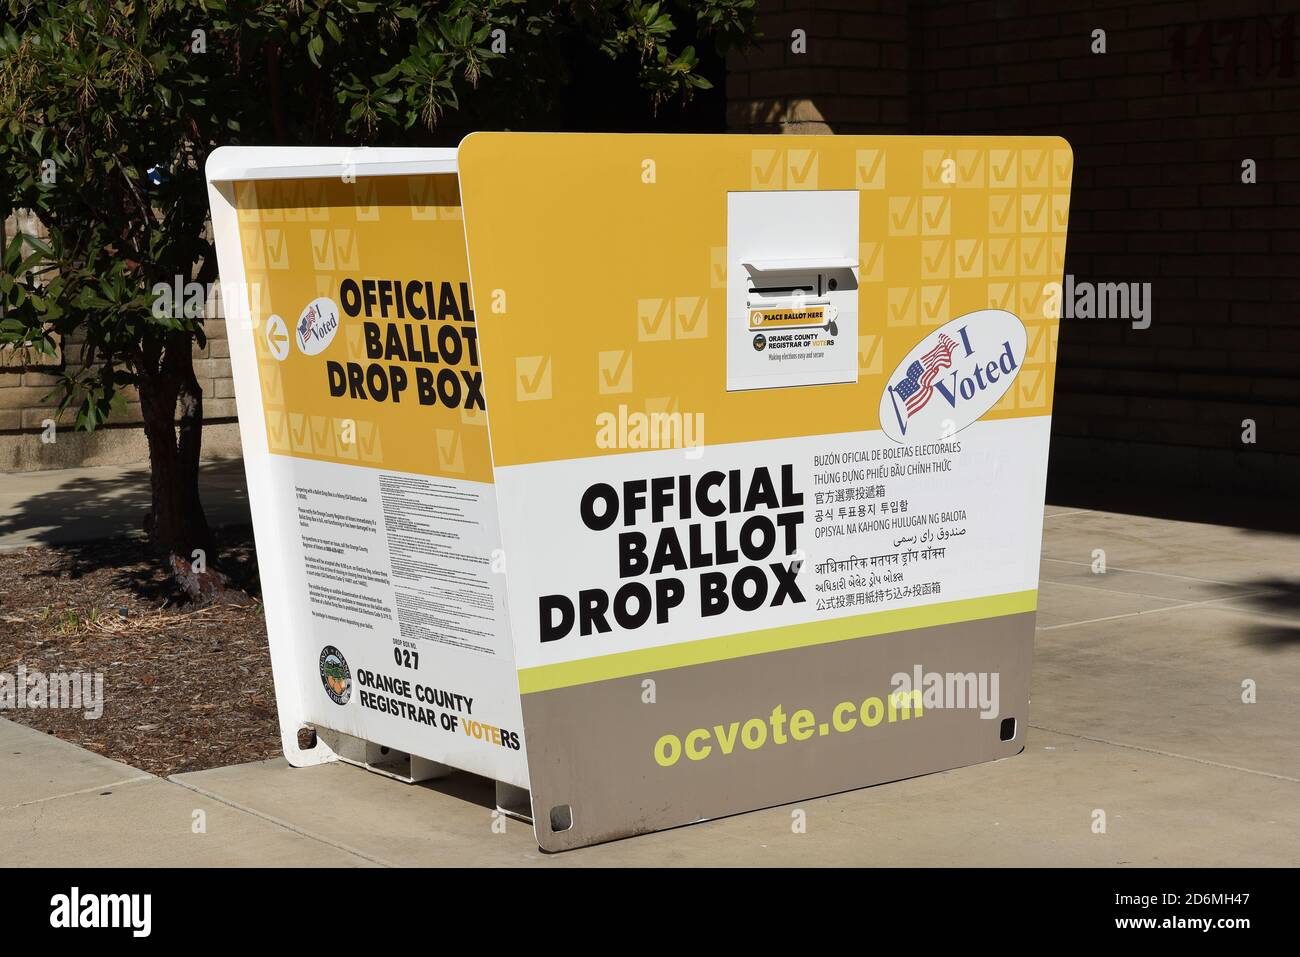 IRVINE, CALIFORNIA - 14 OCT 2020: An Official Ballot Drop Box in in Harvard Park, Irvine, Orange County, California. Stock Photo